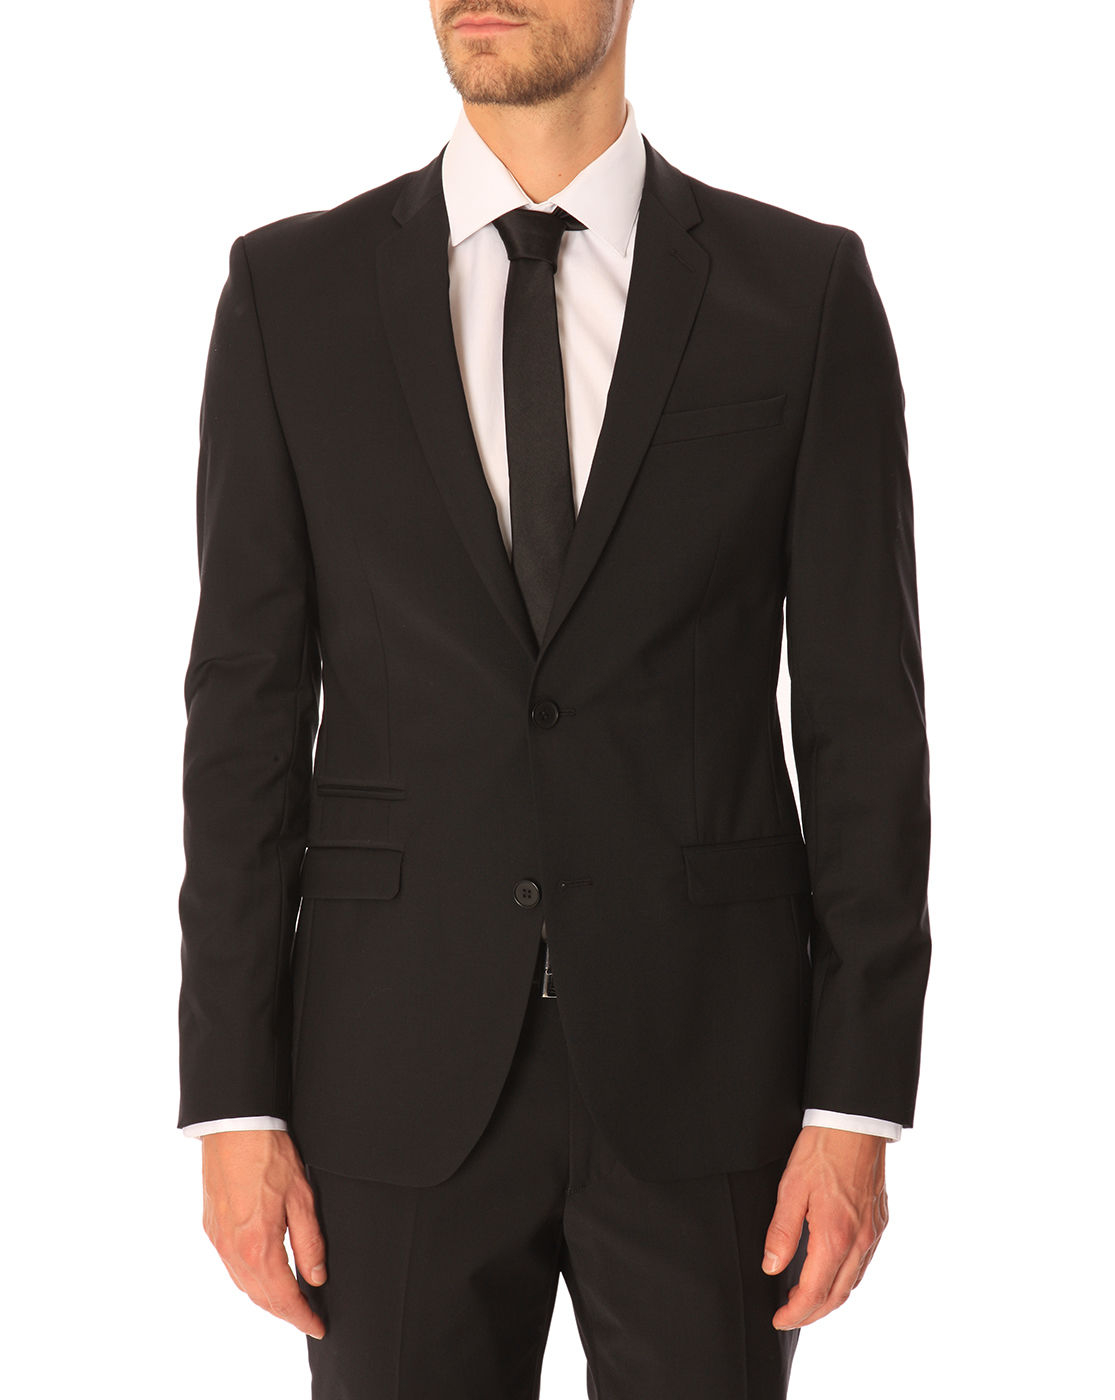 Celio club Black Suit Jacket Fcuplane in Black for Men - Save 70% | Lyst